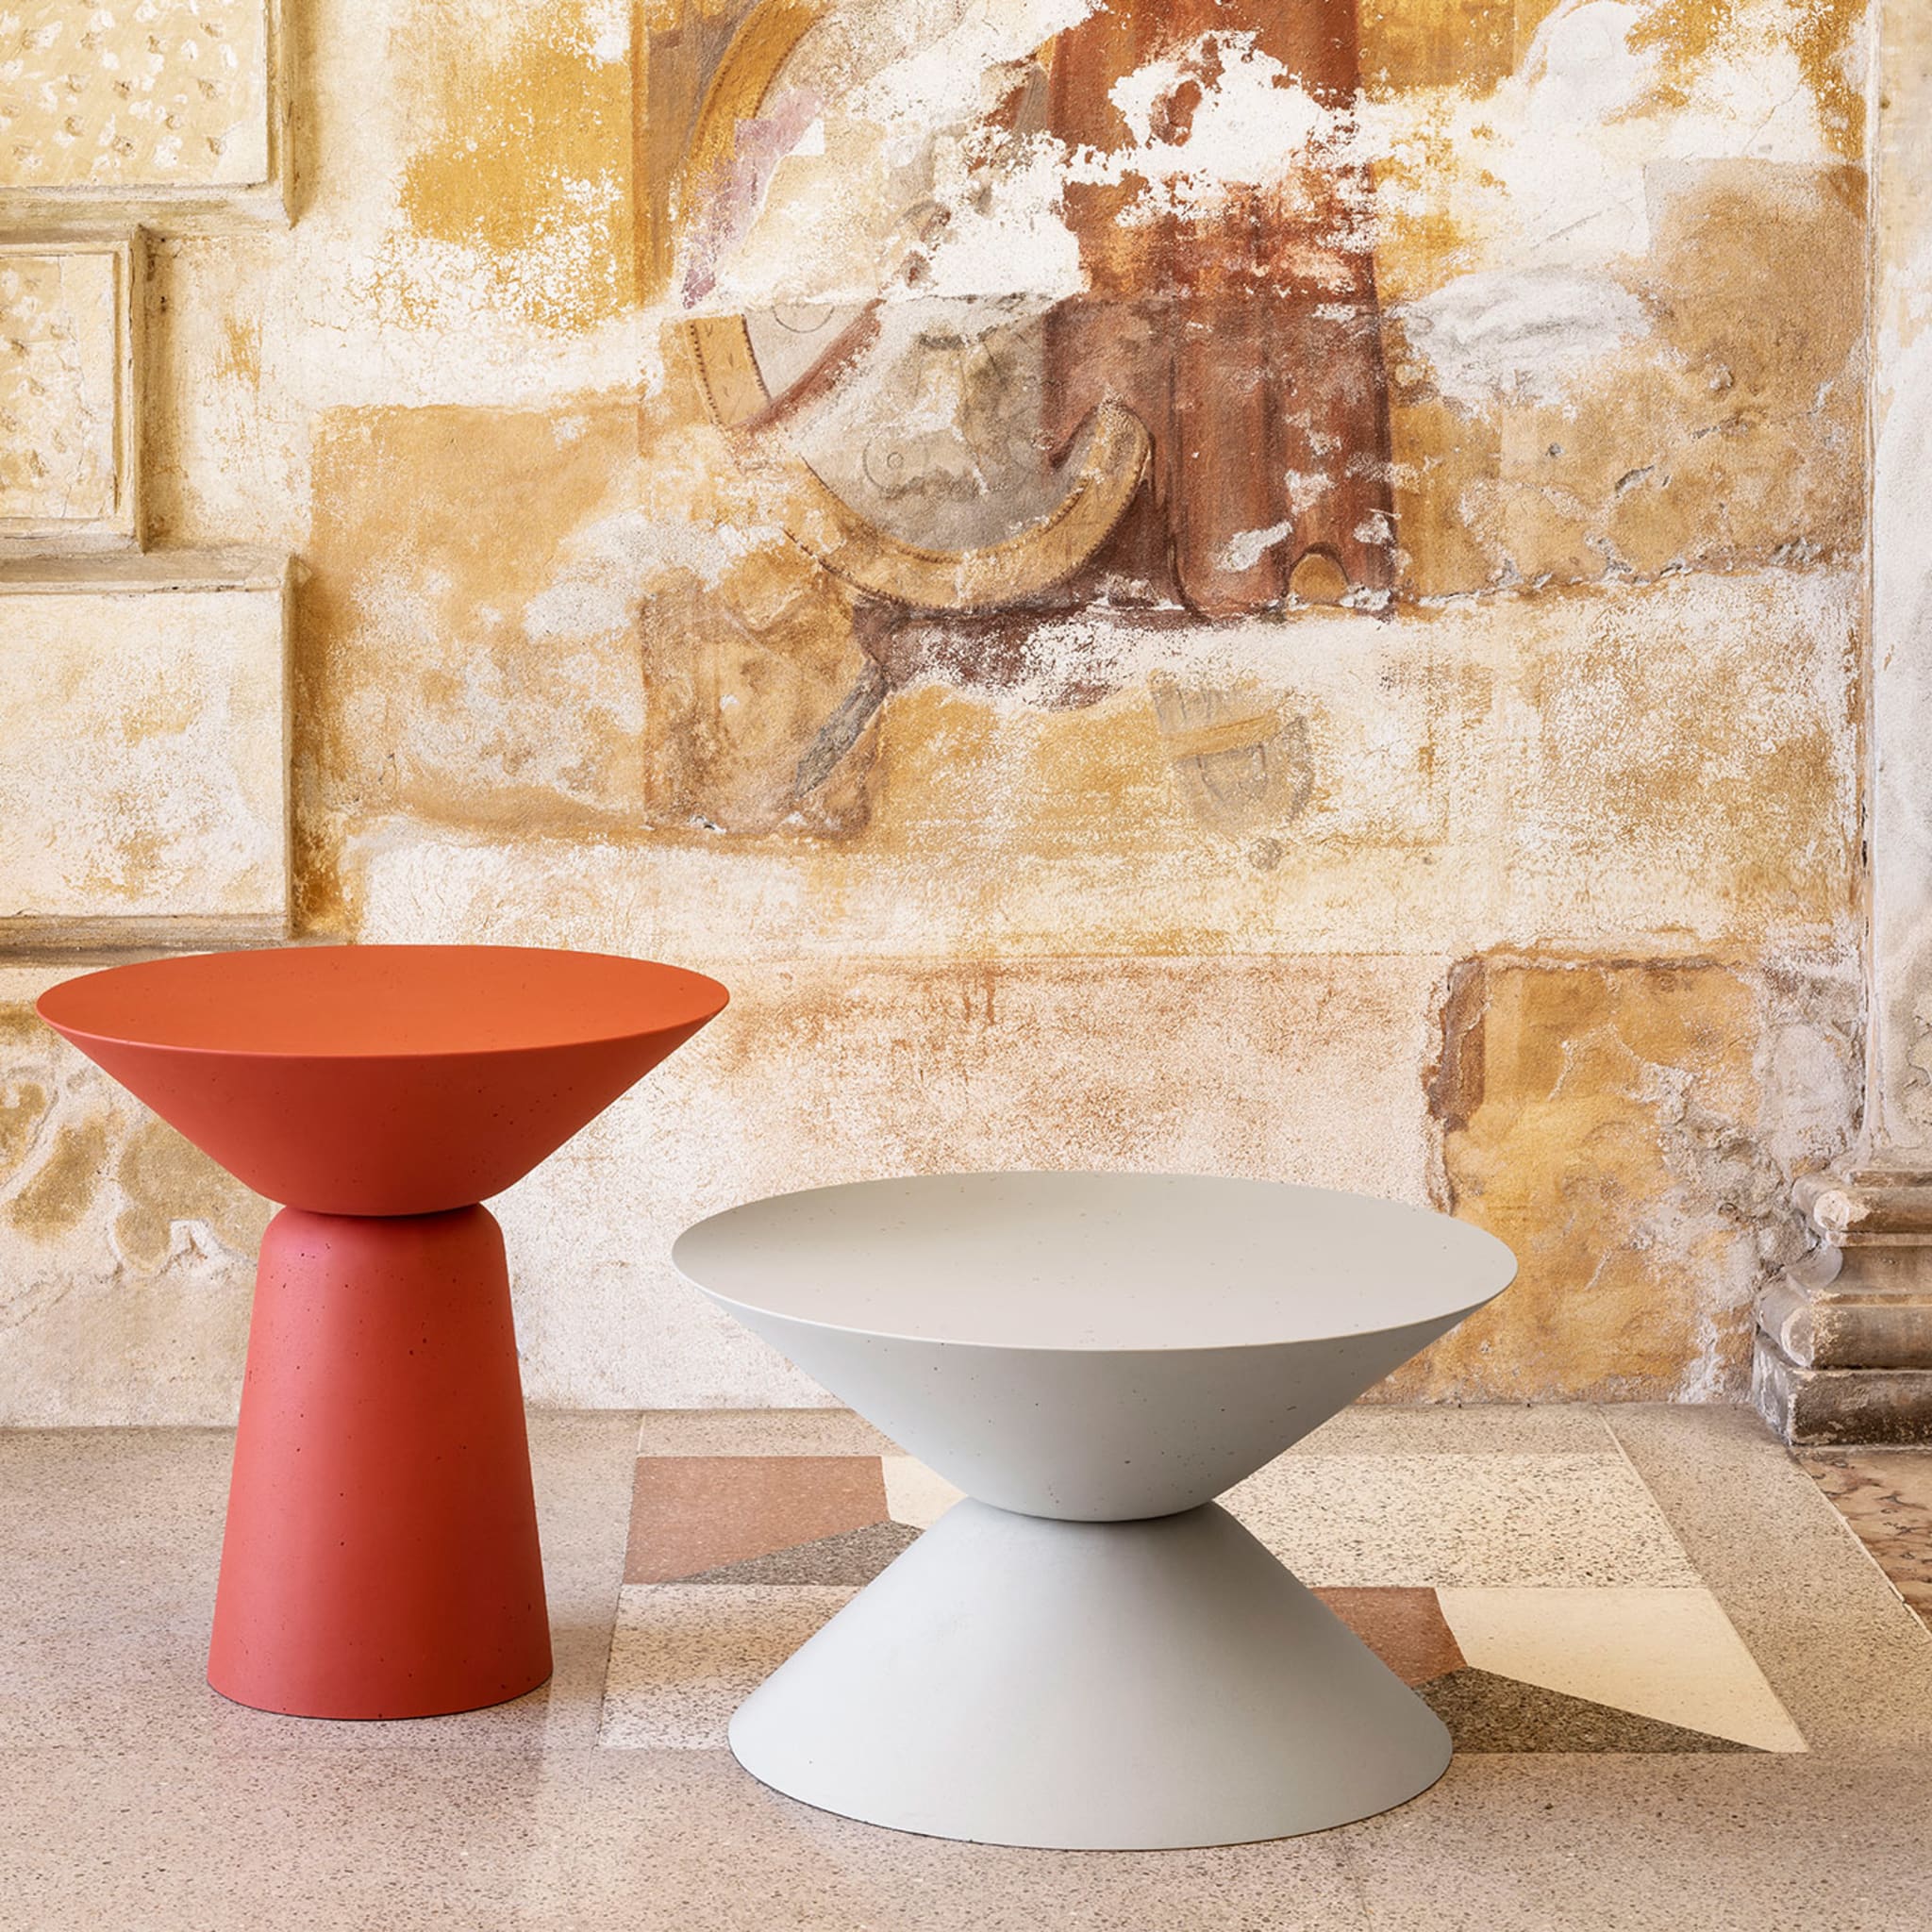 Murano Side Table by Omri Revesz - Alternative view 3